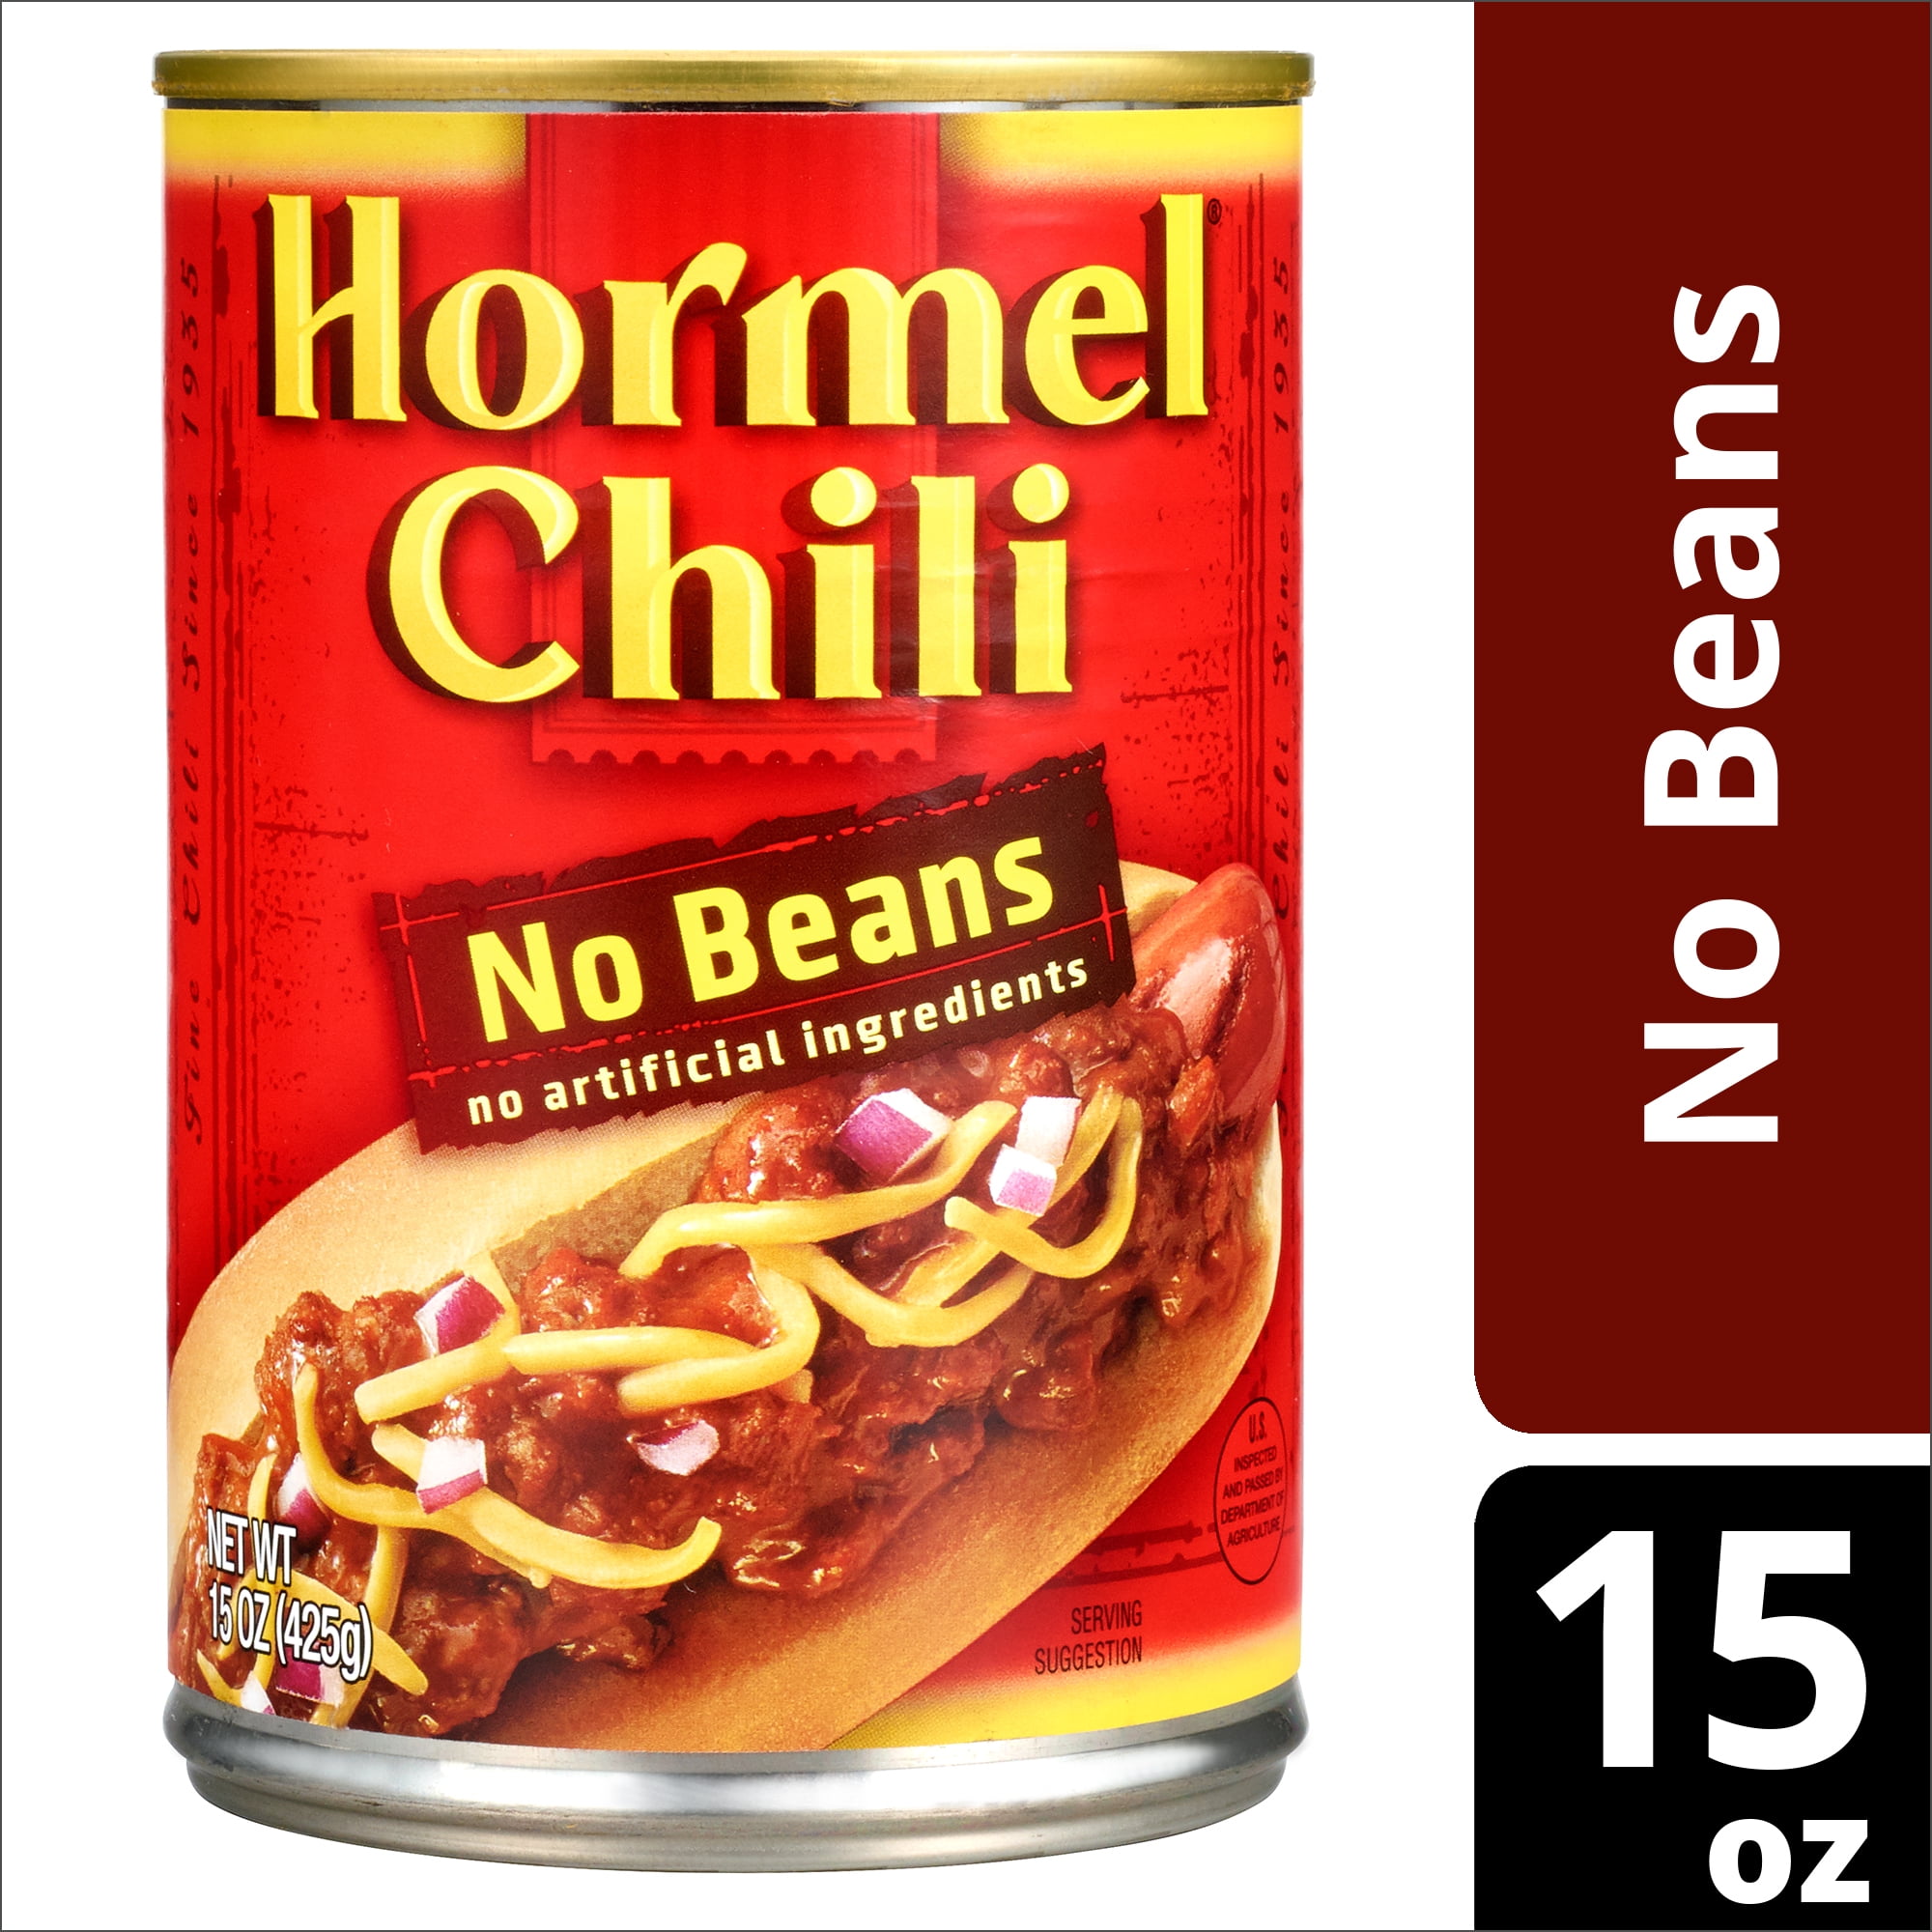 HORMEL Chili, No Beans, No Artificial Ingredients, 15 oz